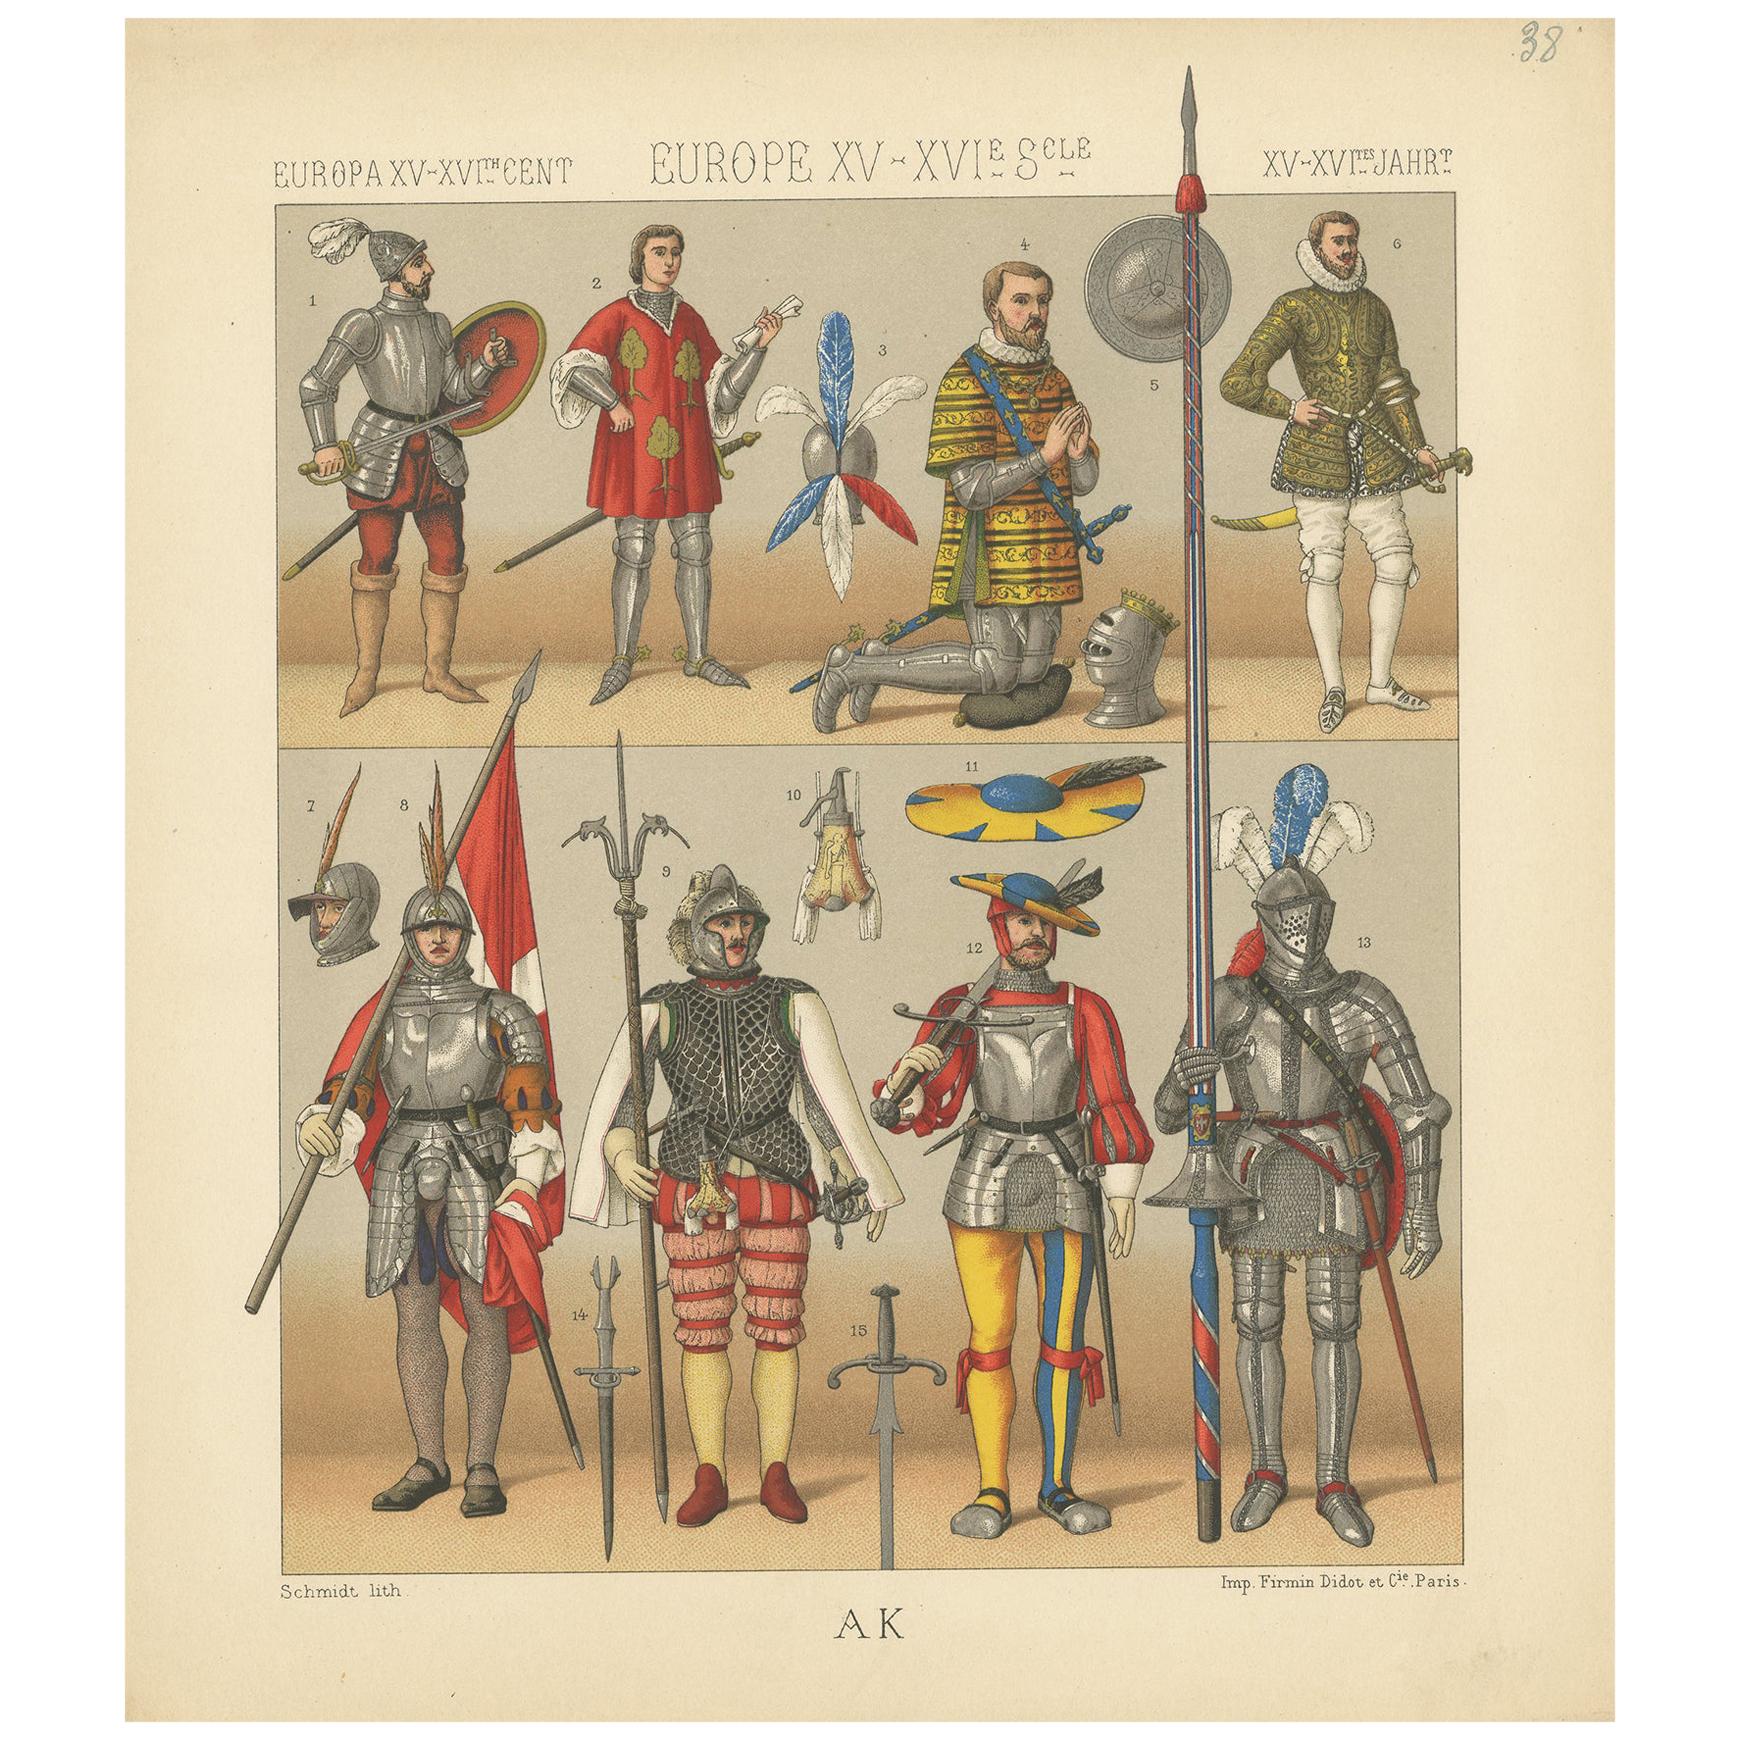 Pl 38 Antique Print of European 15th-16th Century Armament by Racinet